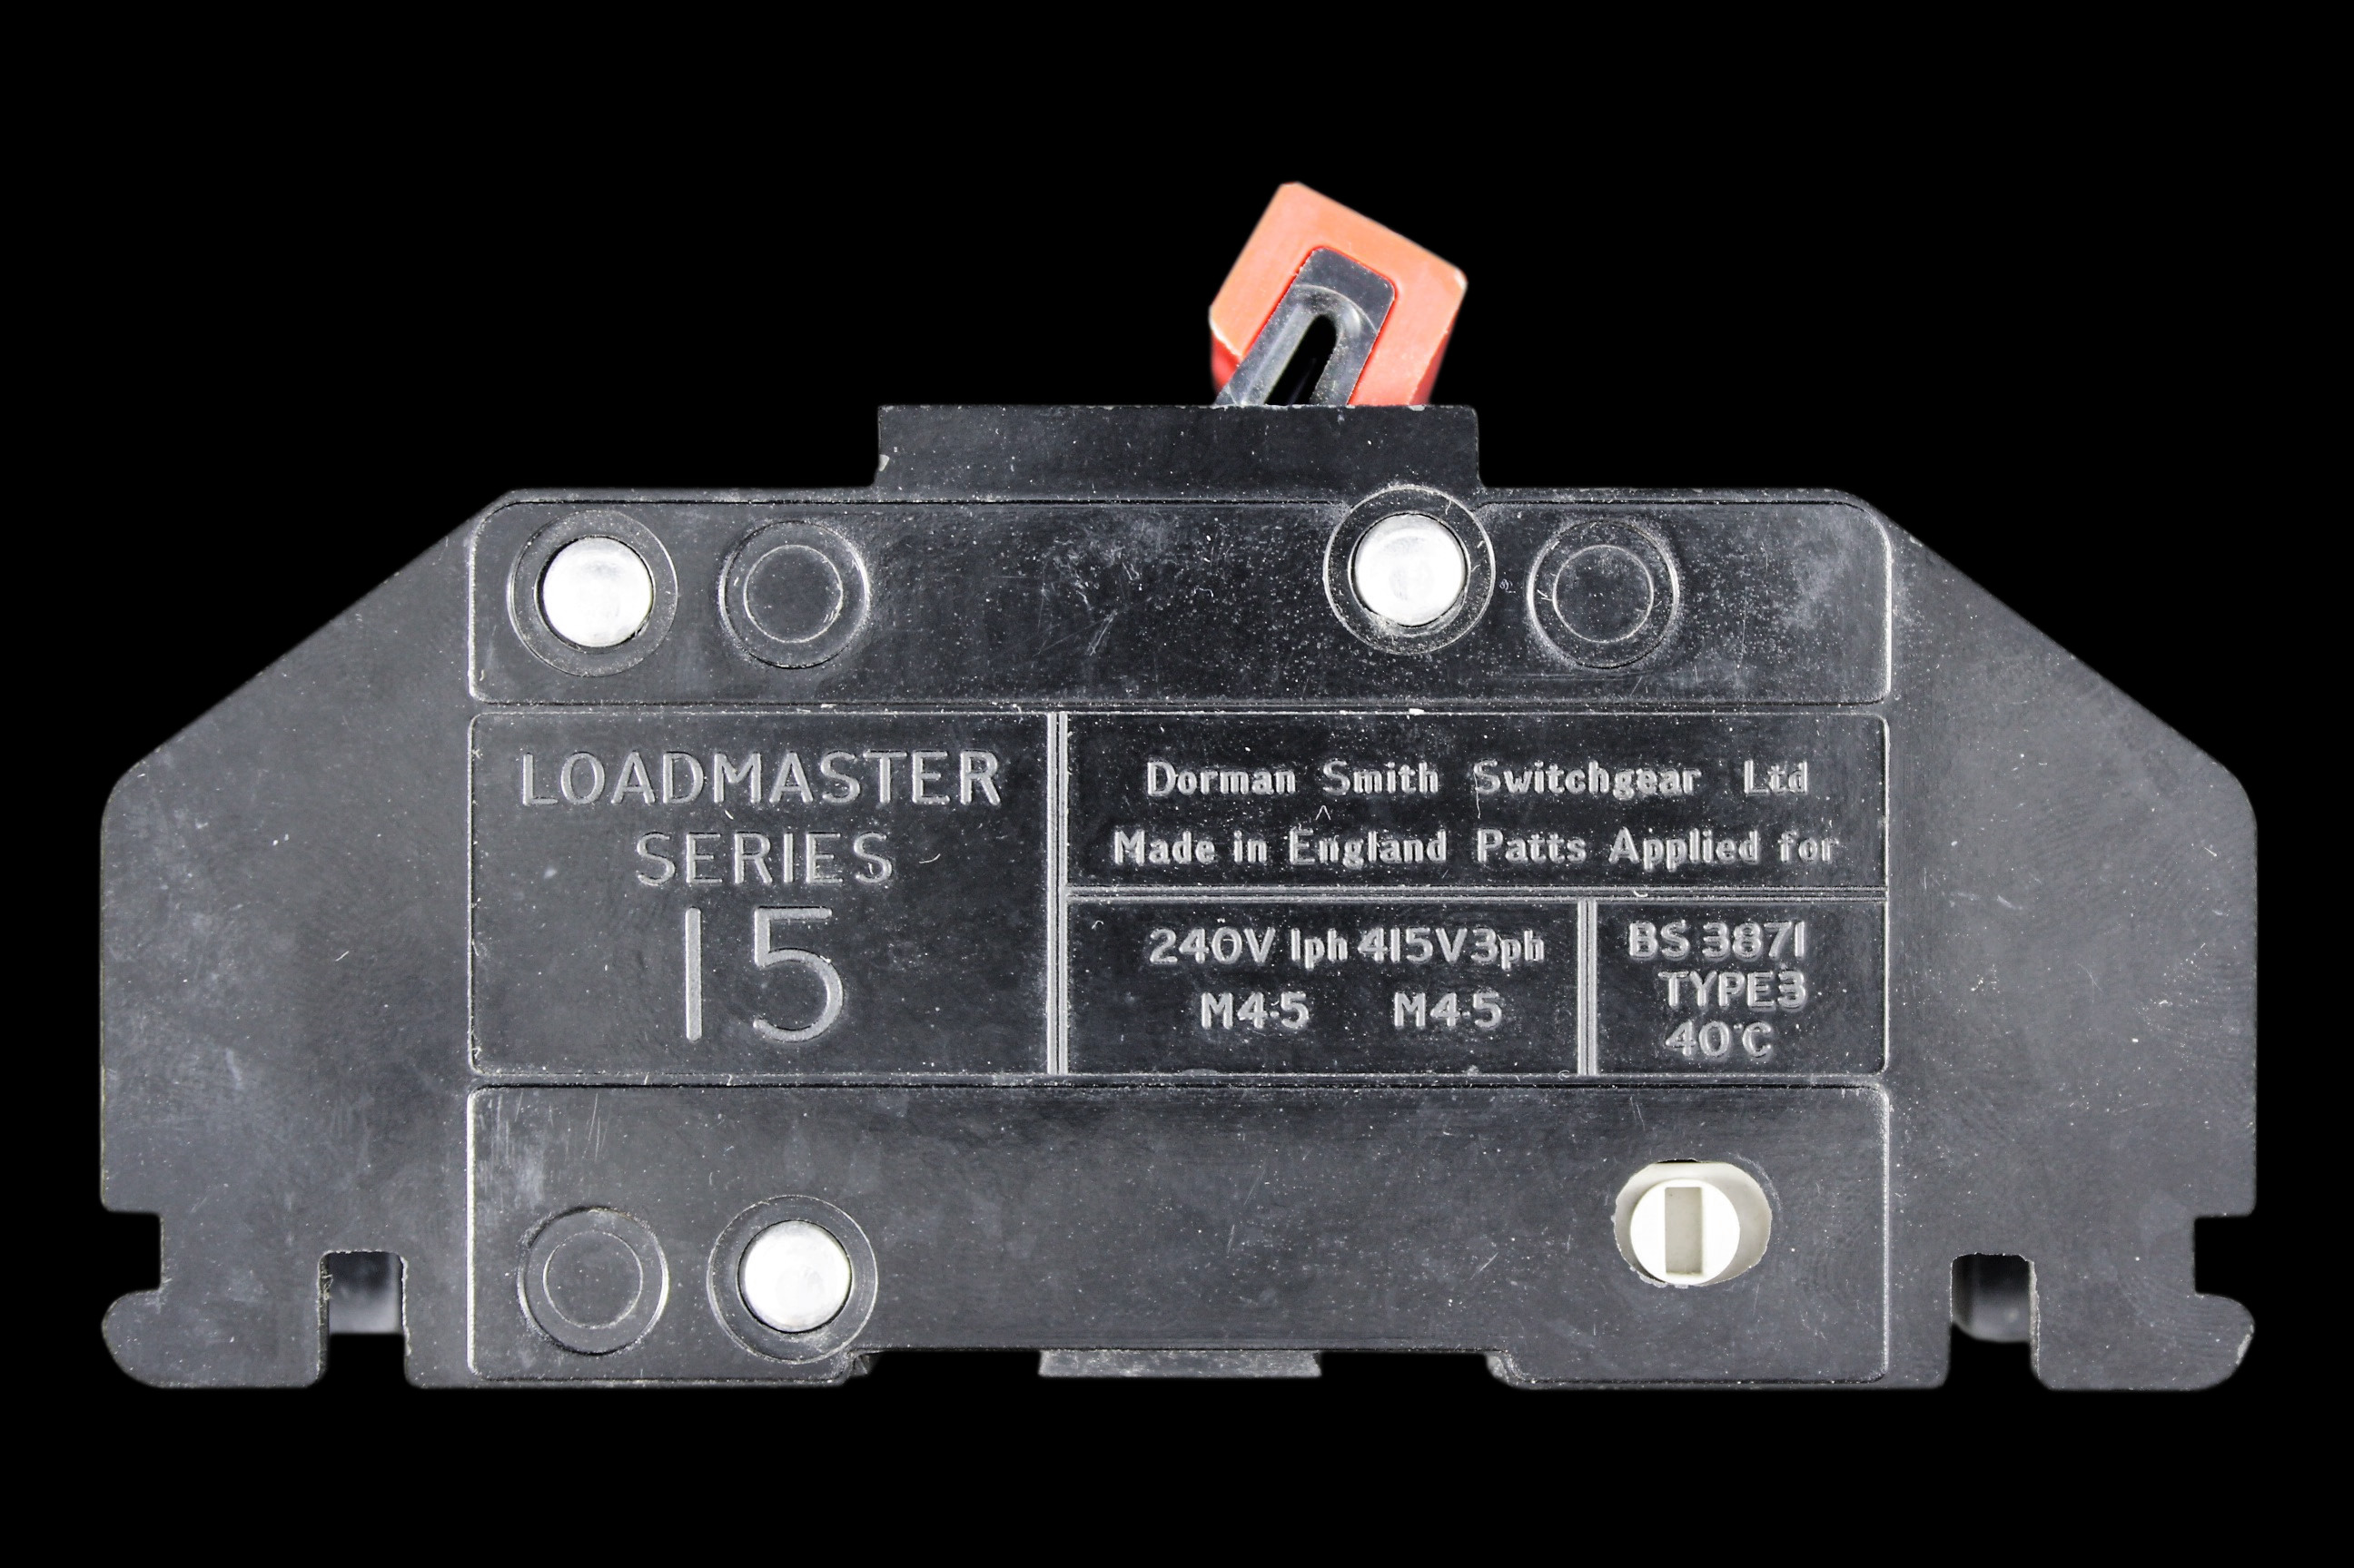 DORMAN SMITH 100 AMP MAIN SWITCH DISCONNECTOR LOADMASTER SERIES 15